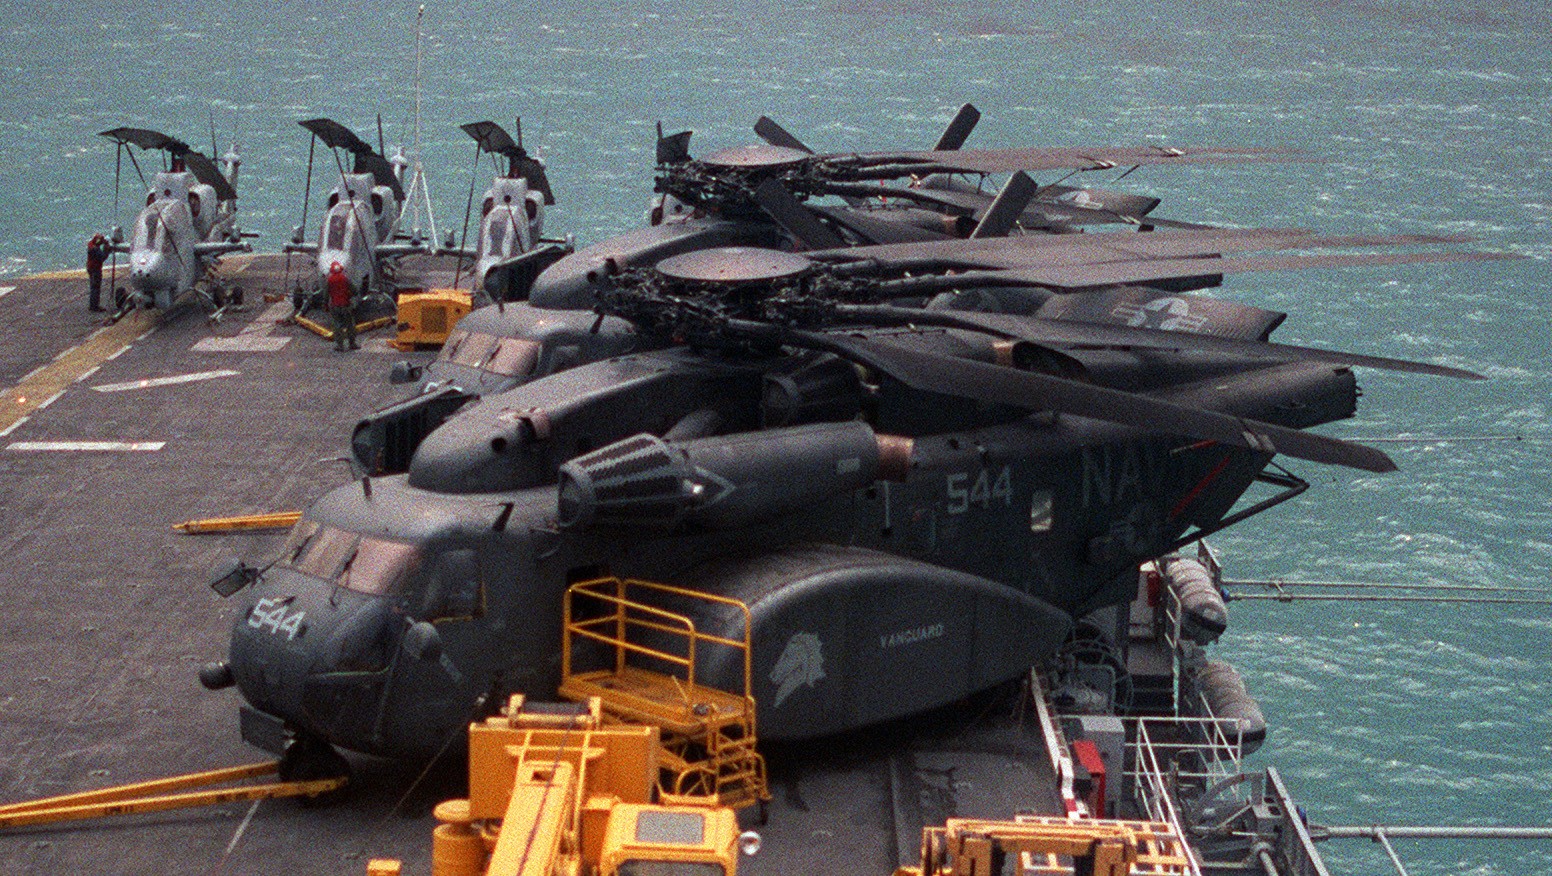 hm-14 vanguard helicopter mine countermeasures squadron navy mh-53e sea dragon 61 uss new orleans lph-11 desert storm 1991